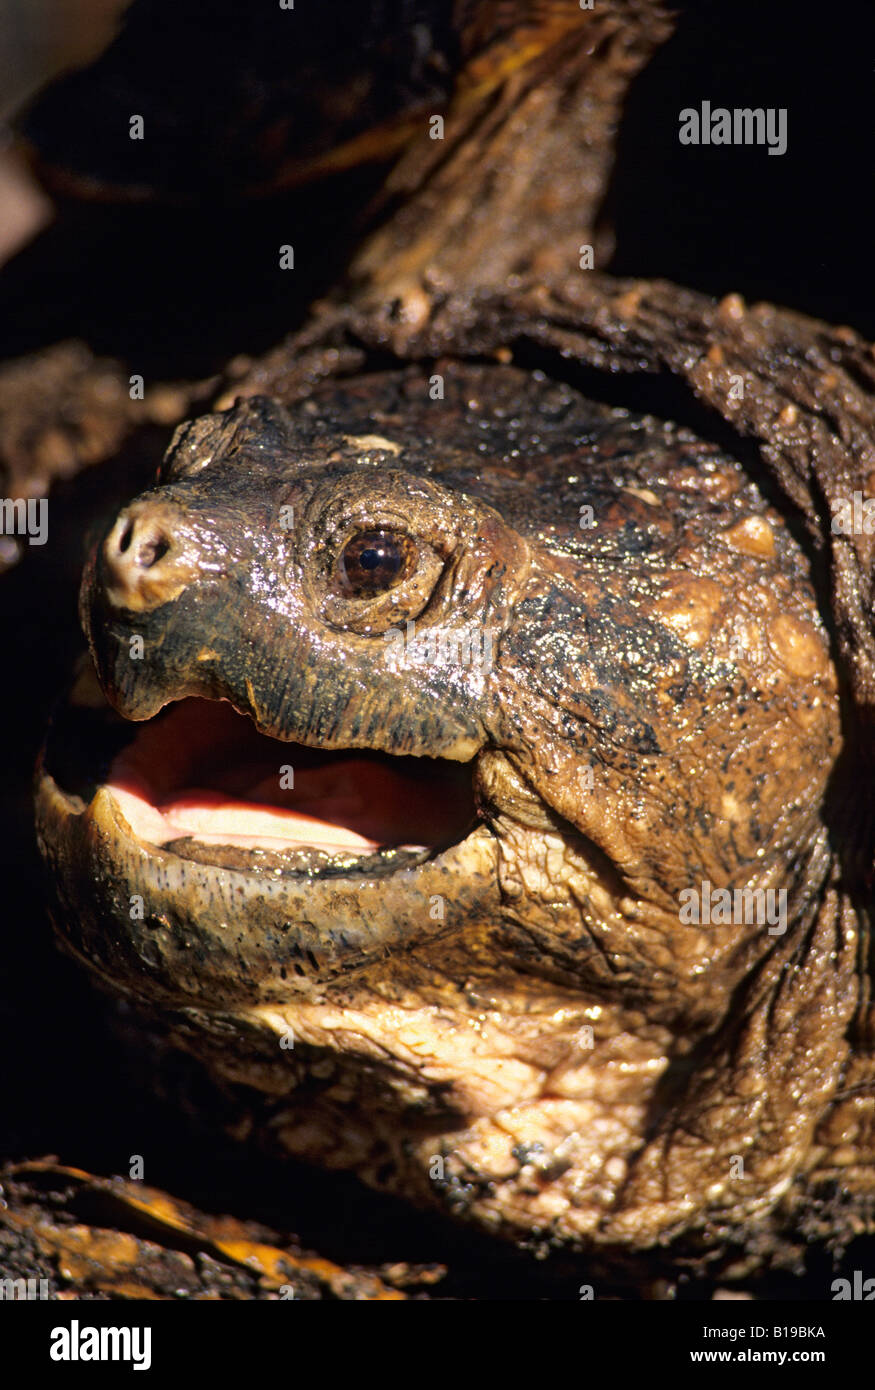 Adult snapping turtle (Chelydra serpentina osceola), central Florida, USA Stock Photo